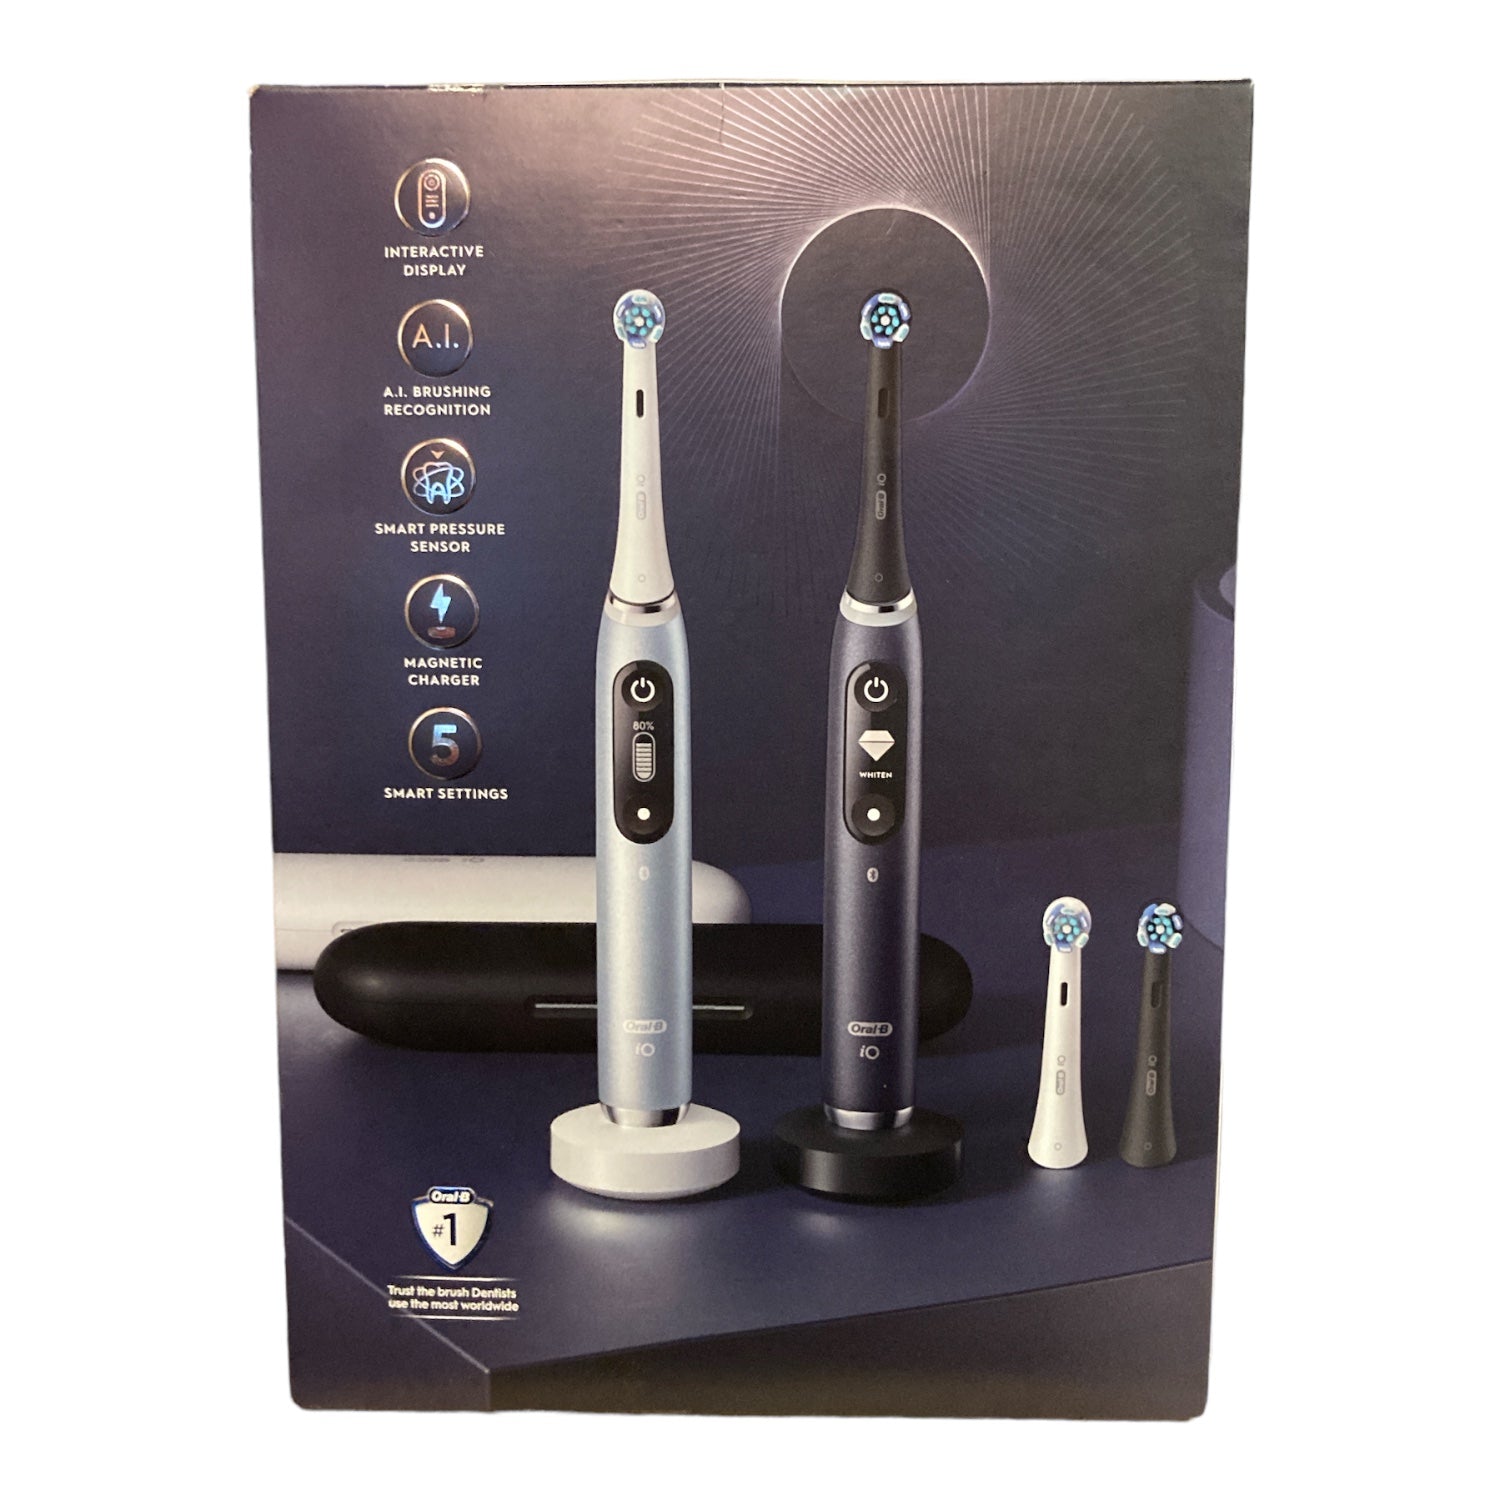 Oral-B iO Series 7 Electric Toothbrush Black Onyx & Aquamarine (2 Pack)